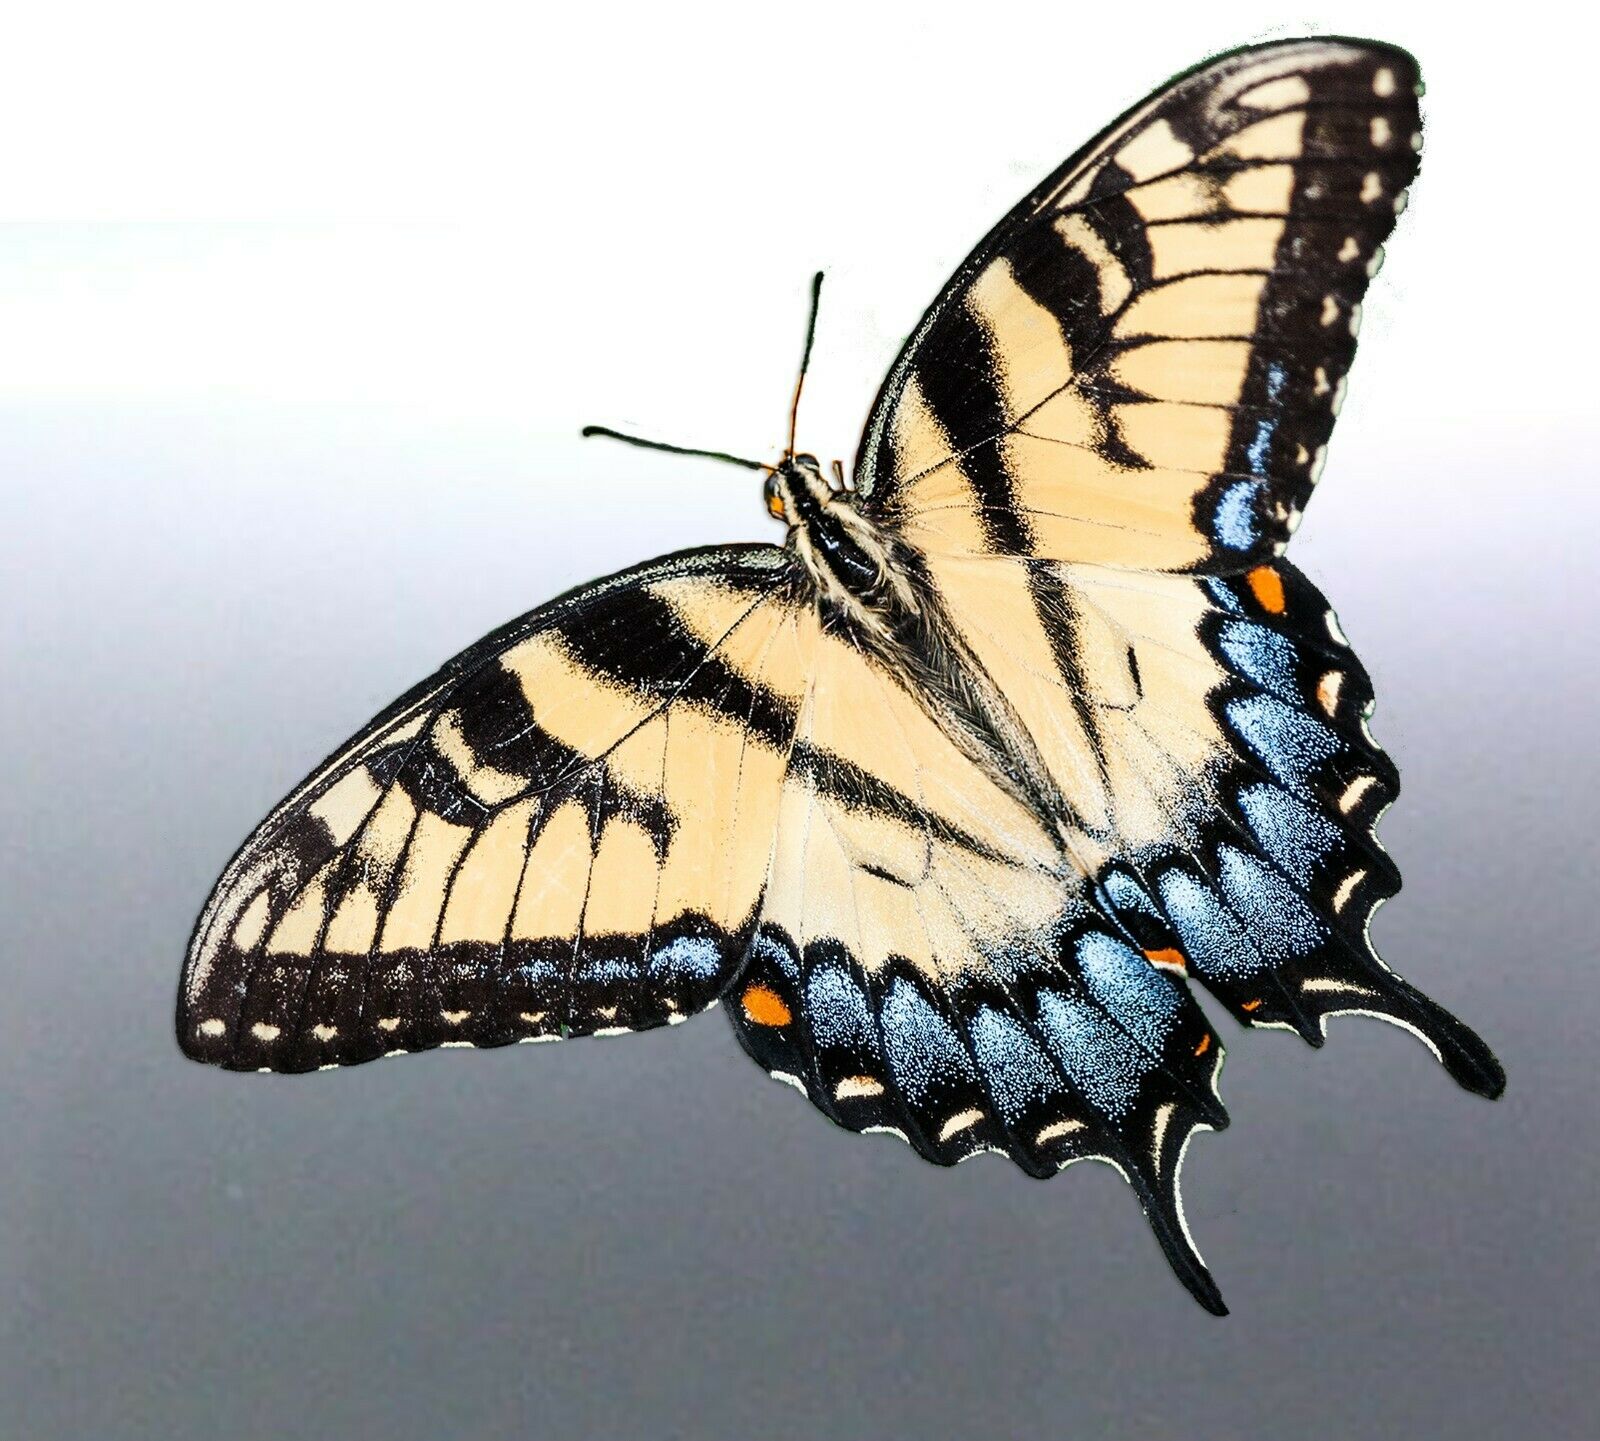 Butterfly decal vinyl cut car Sticker bug tribal design – Stickdat